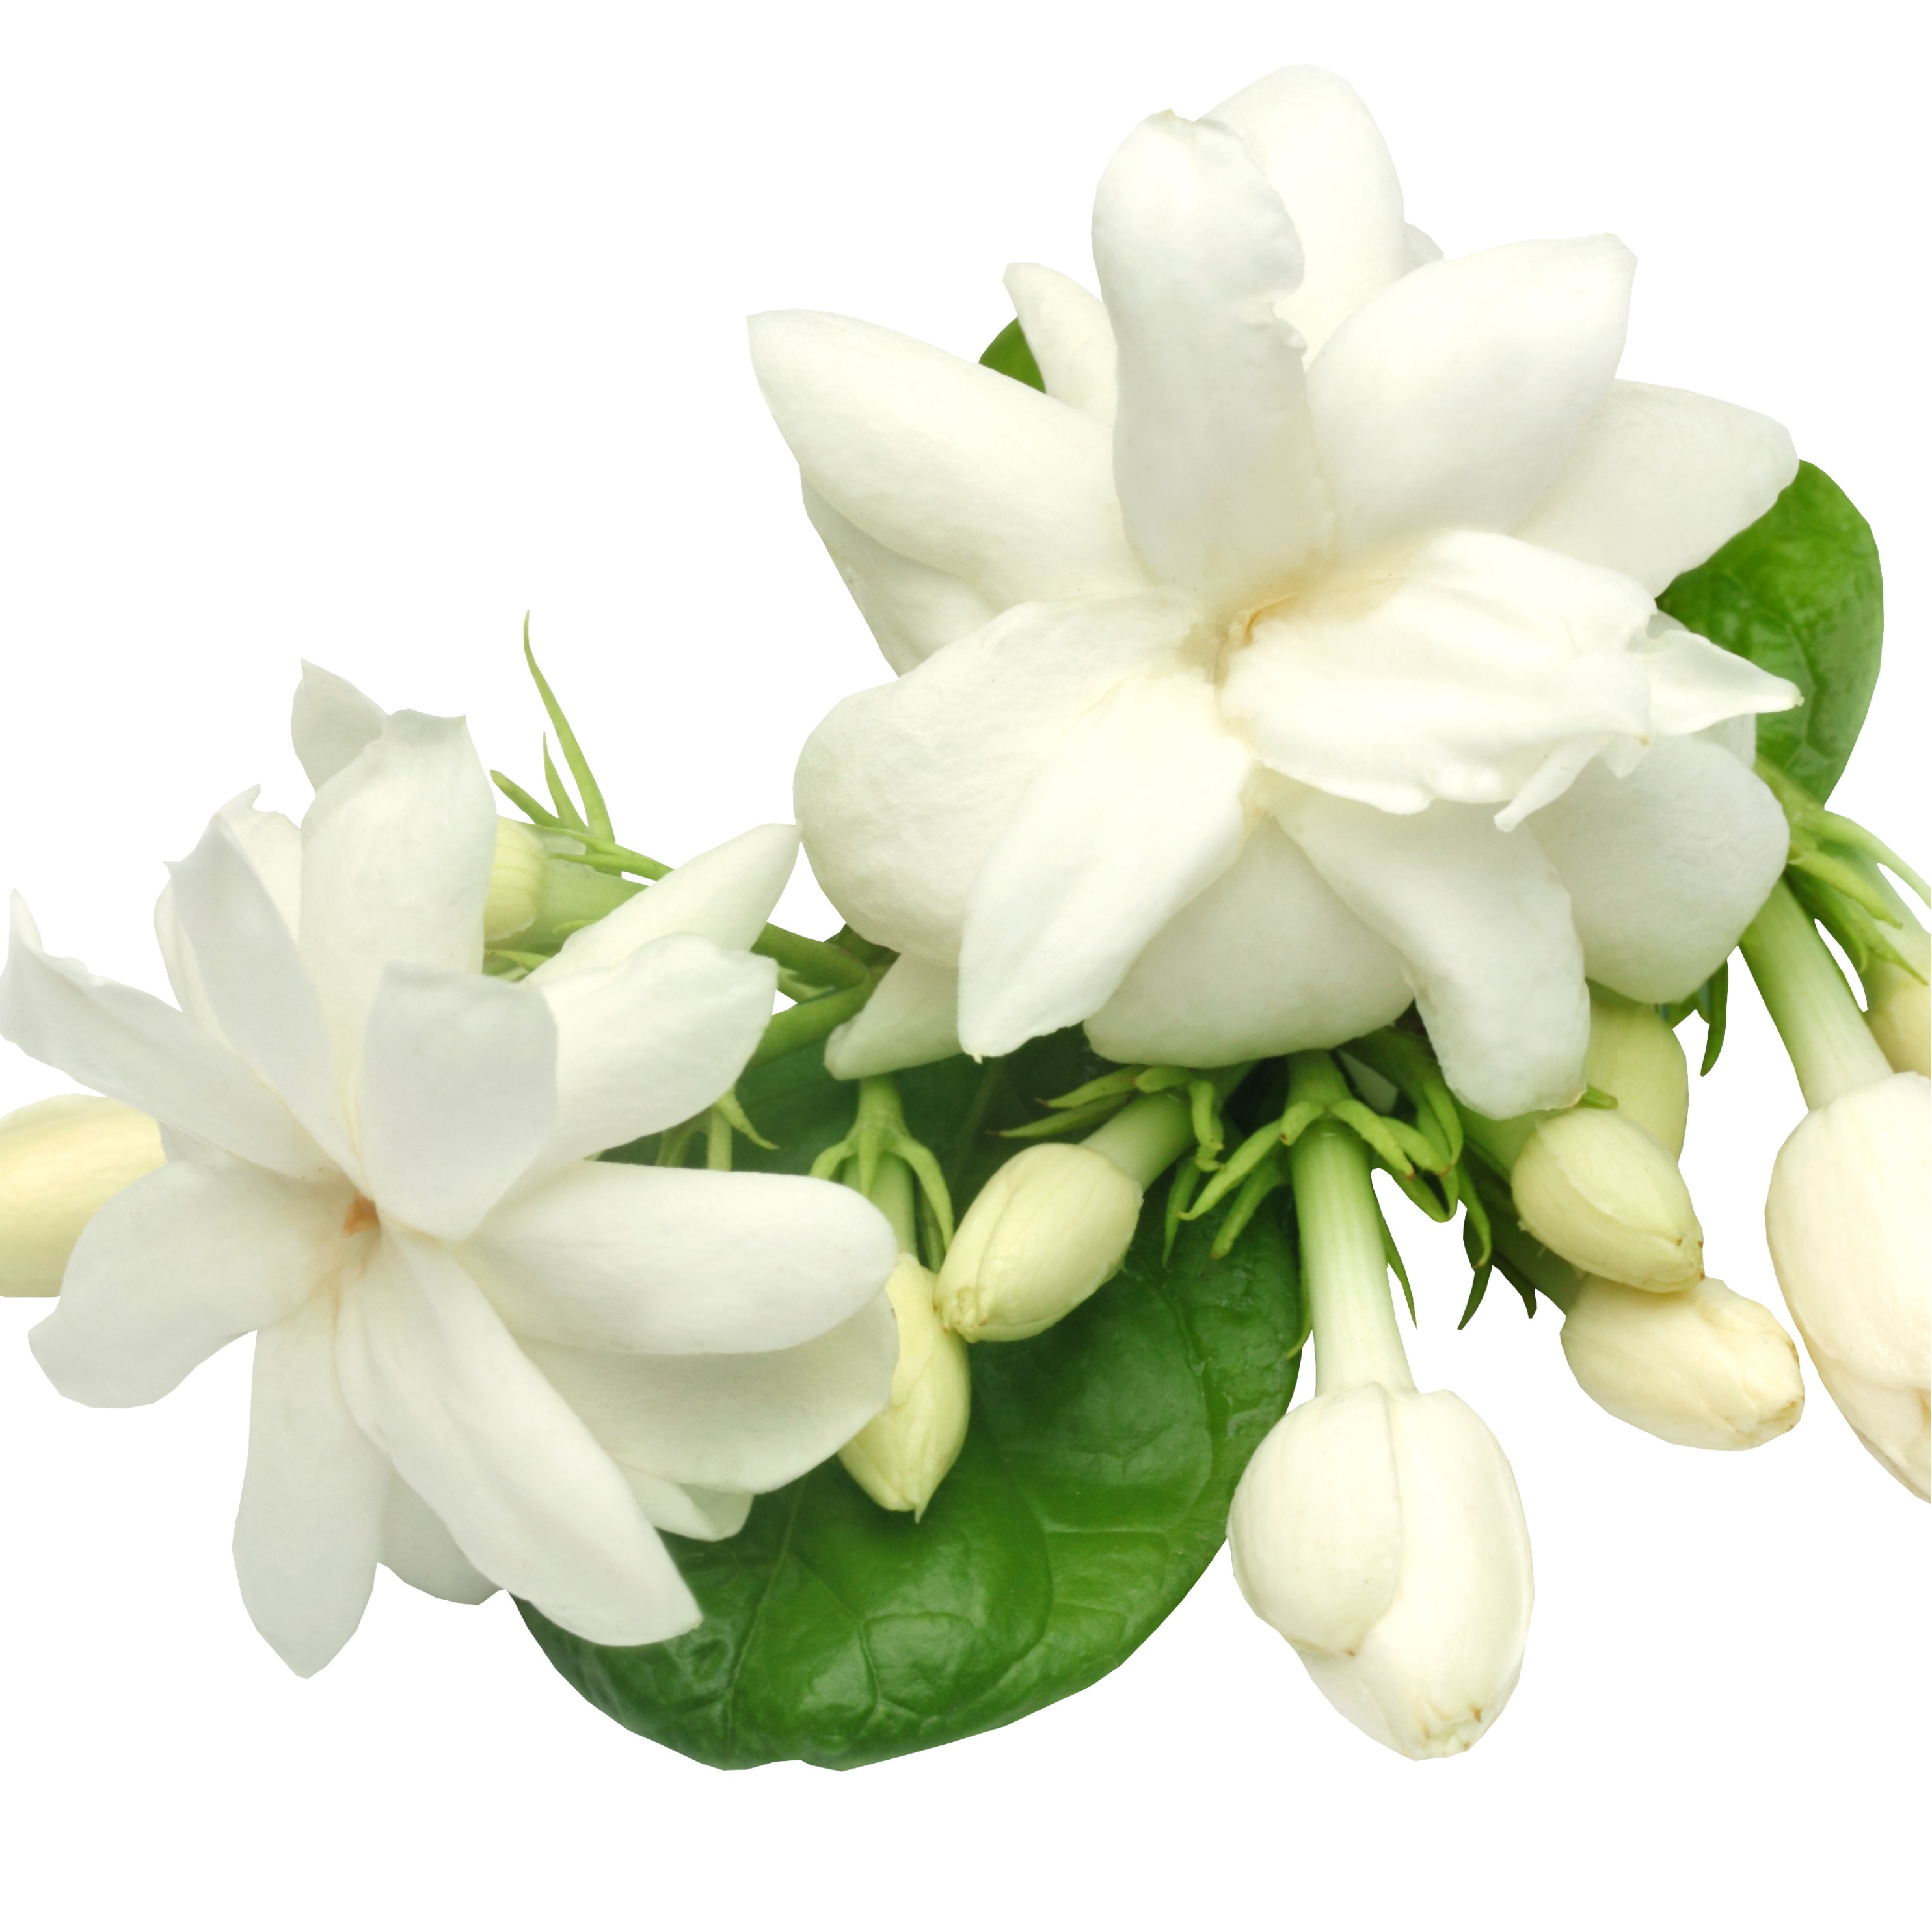 Jasmine flowers / ମଲ୍ଲି ଫୁଲ